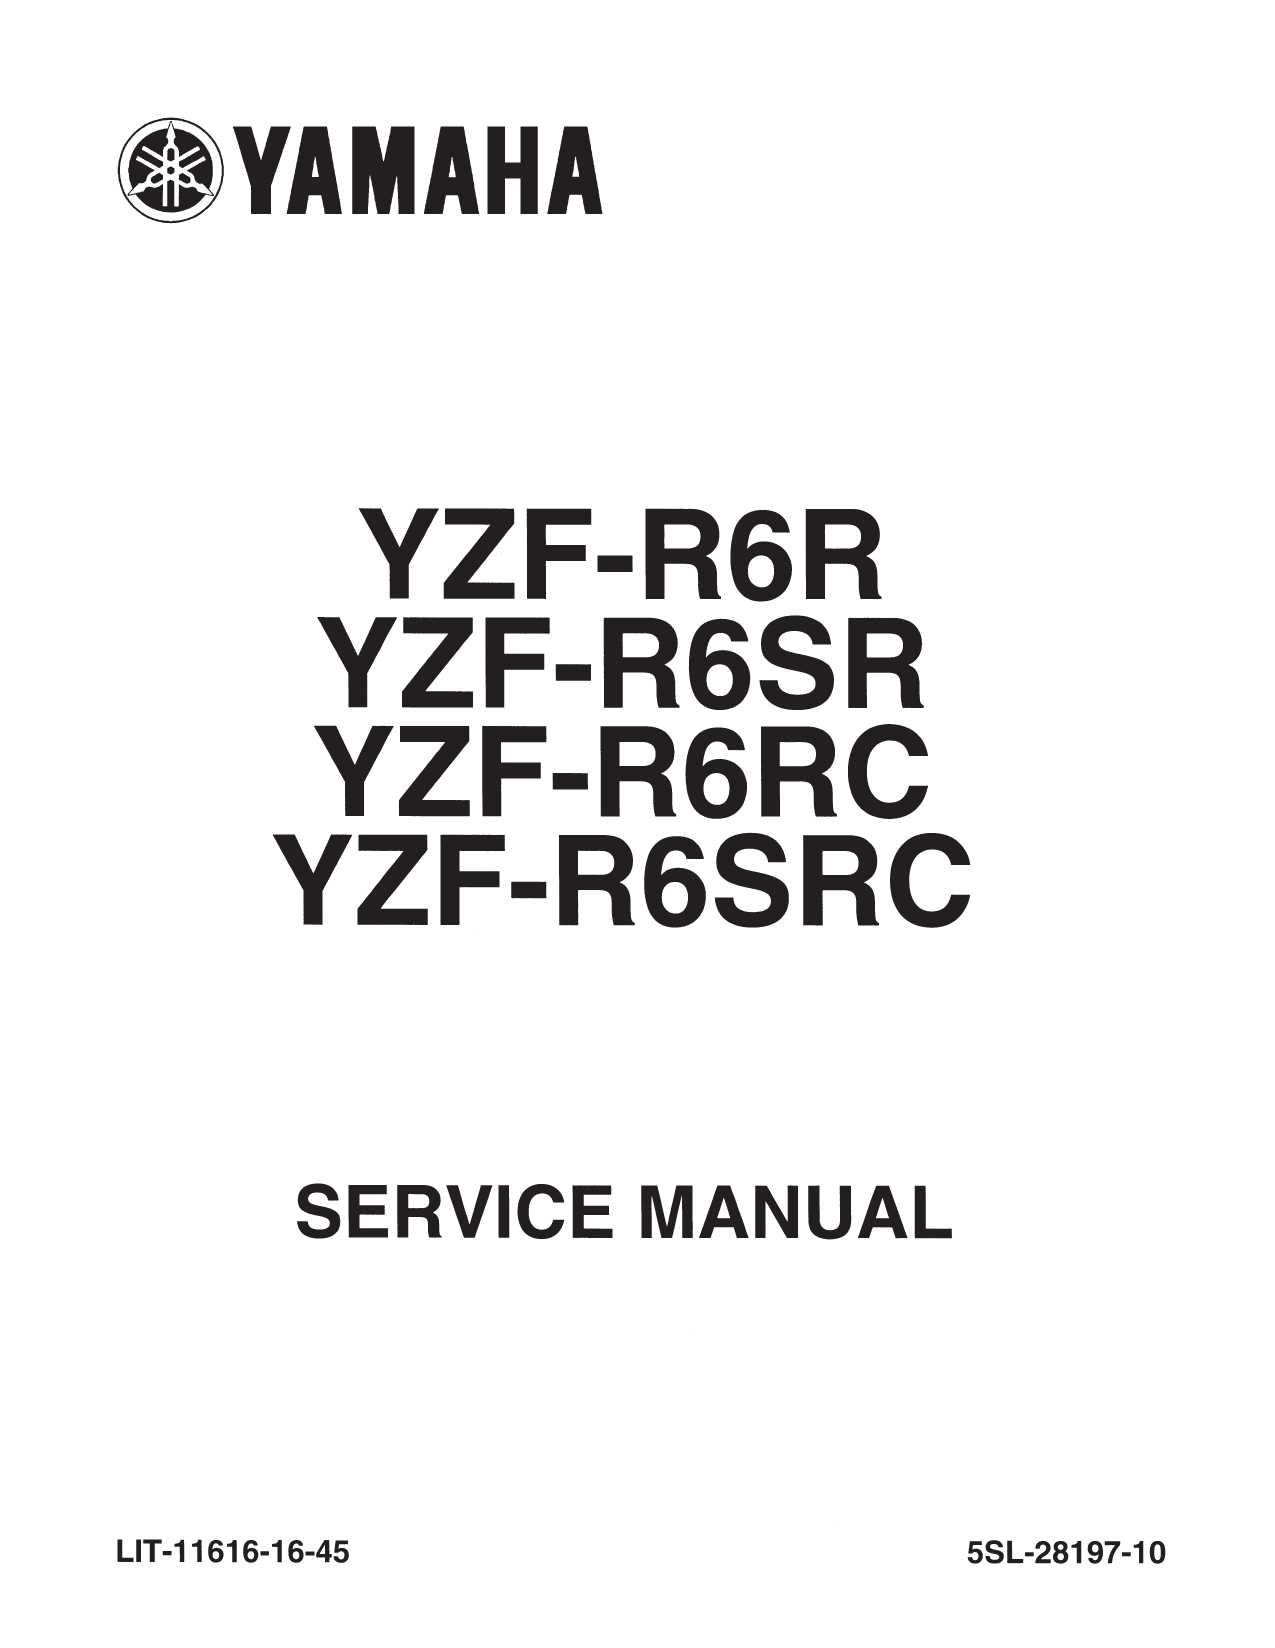 2003 Yamaha YZF-R6 repair and service manual Preview image 1